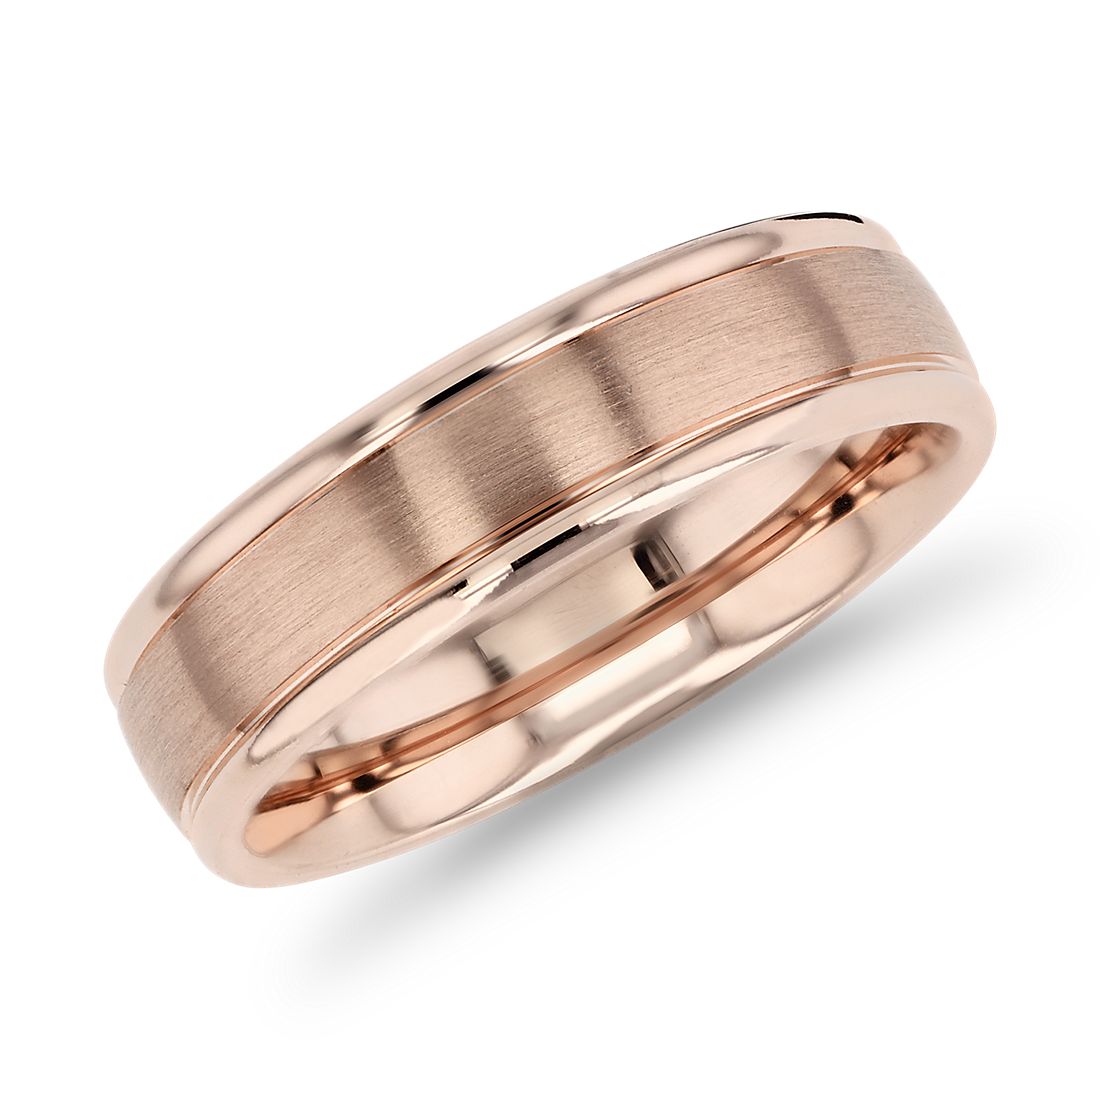 Brushed Inlay Wedding Ring in 18k Rose Gold (6 mm)